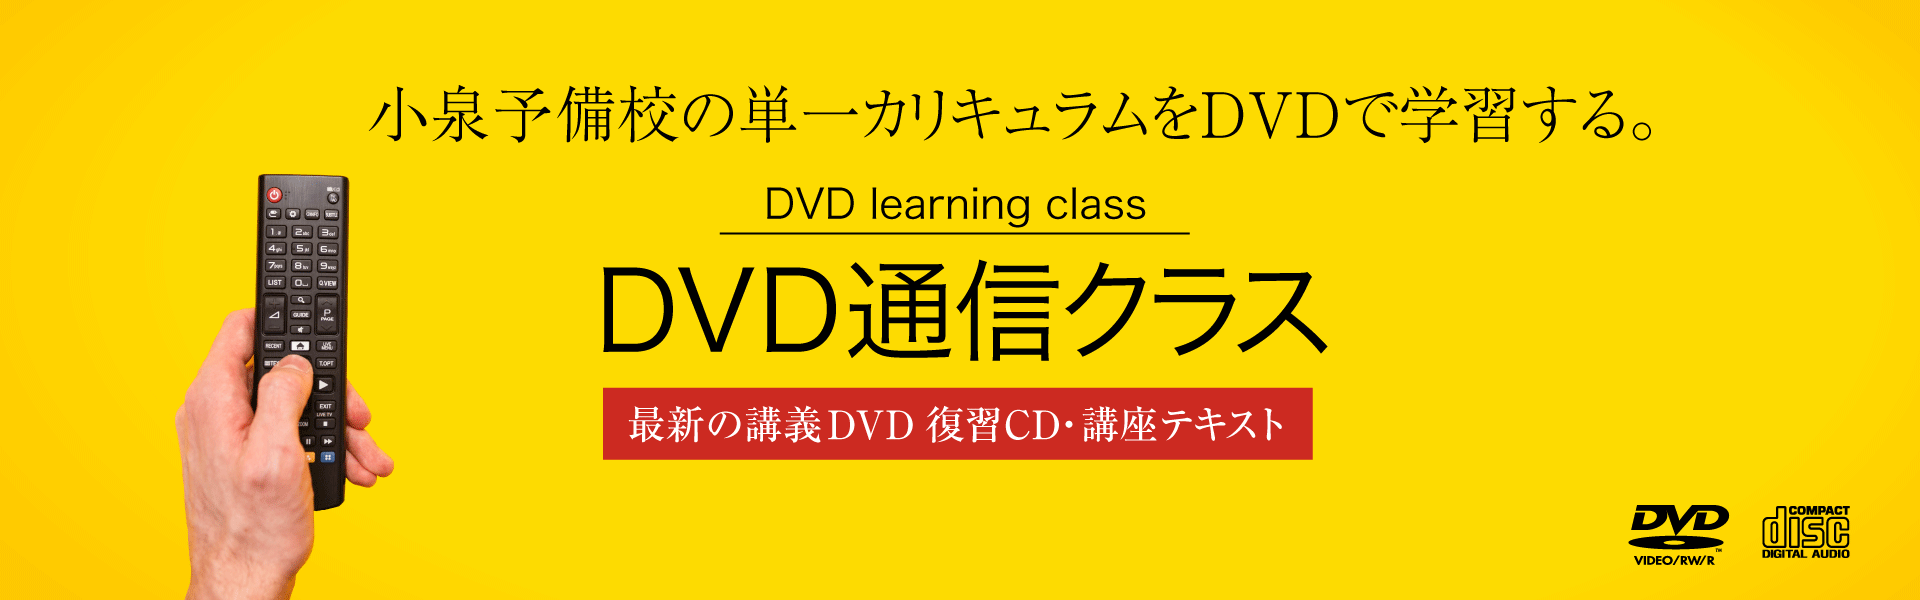 DVD通信クラス